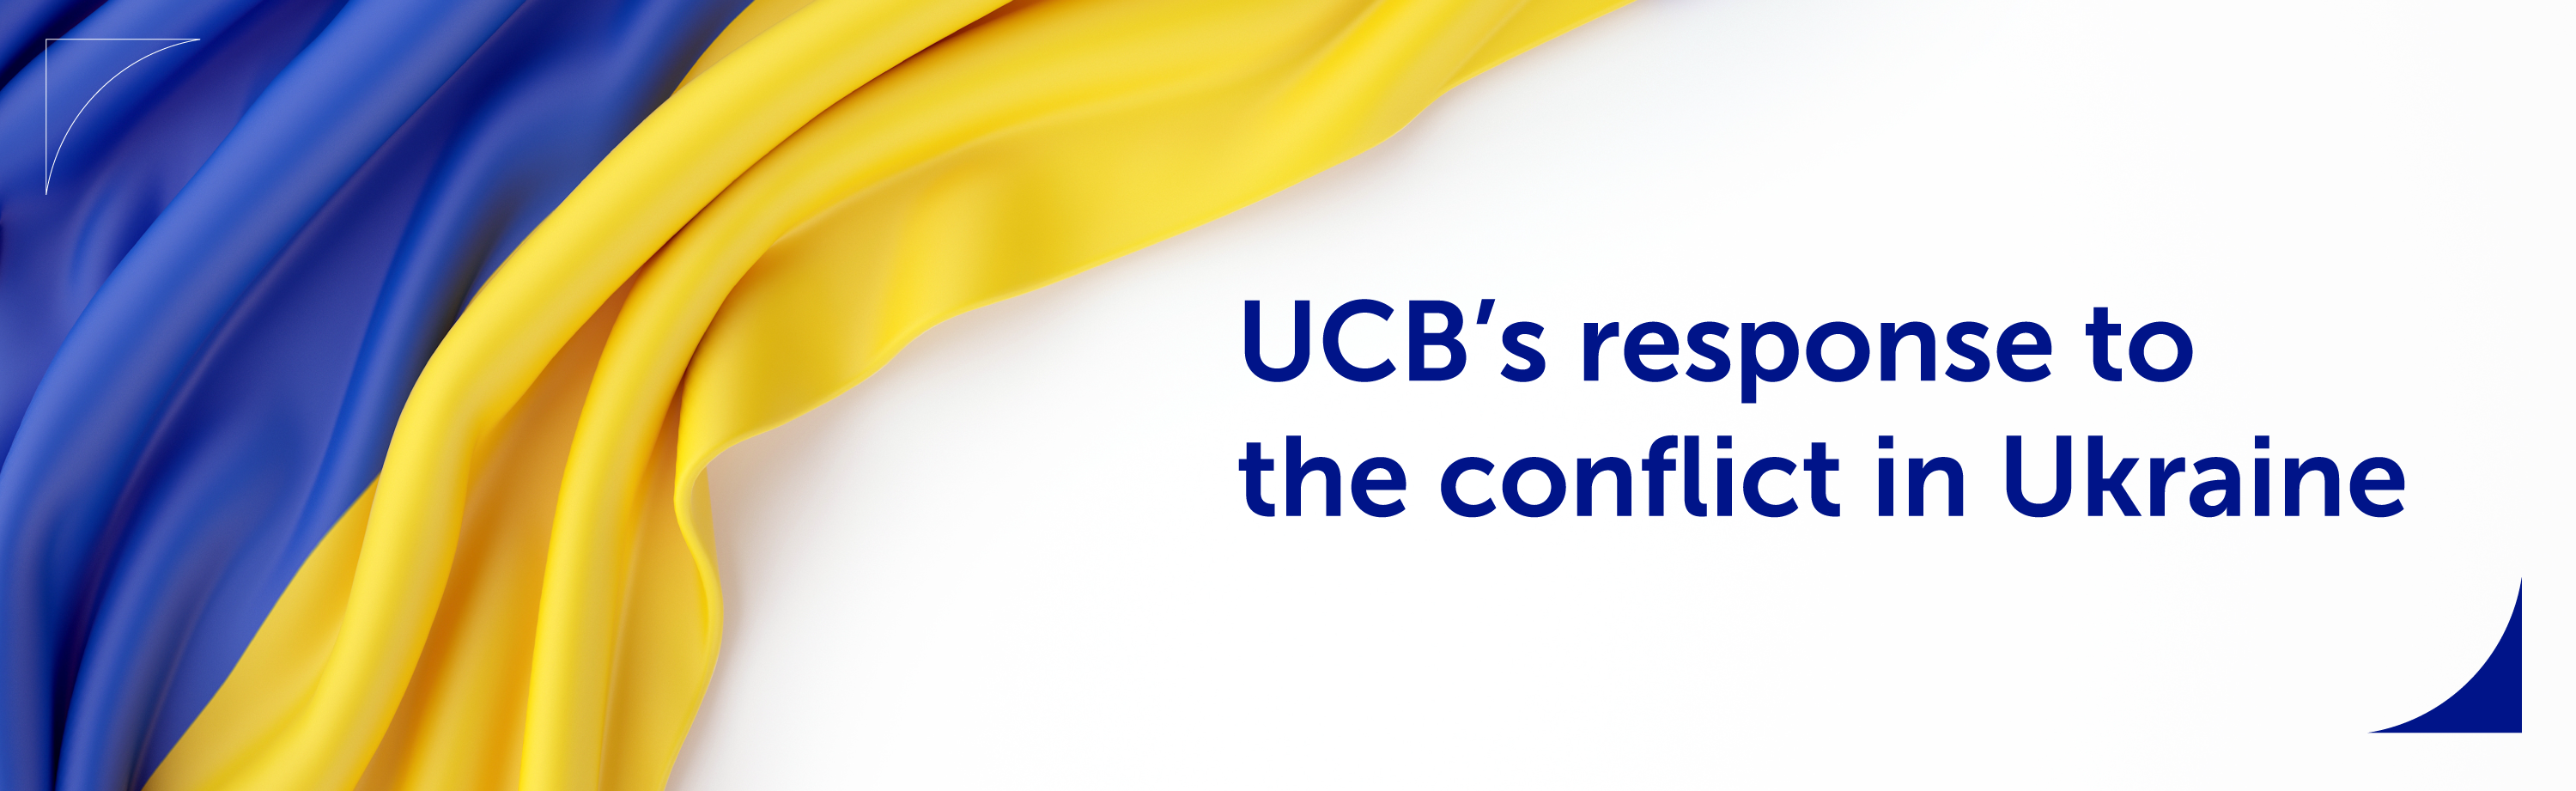 UCB’s response to the conflict in Ukraine